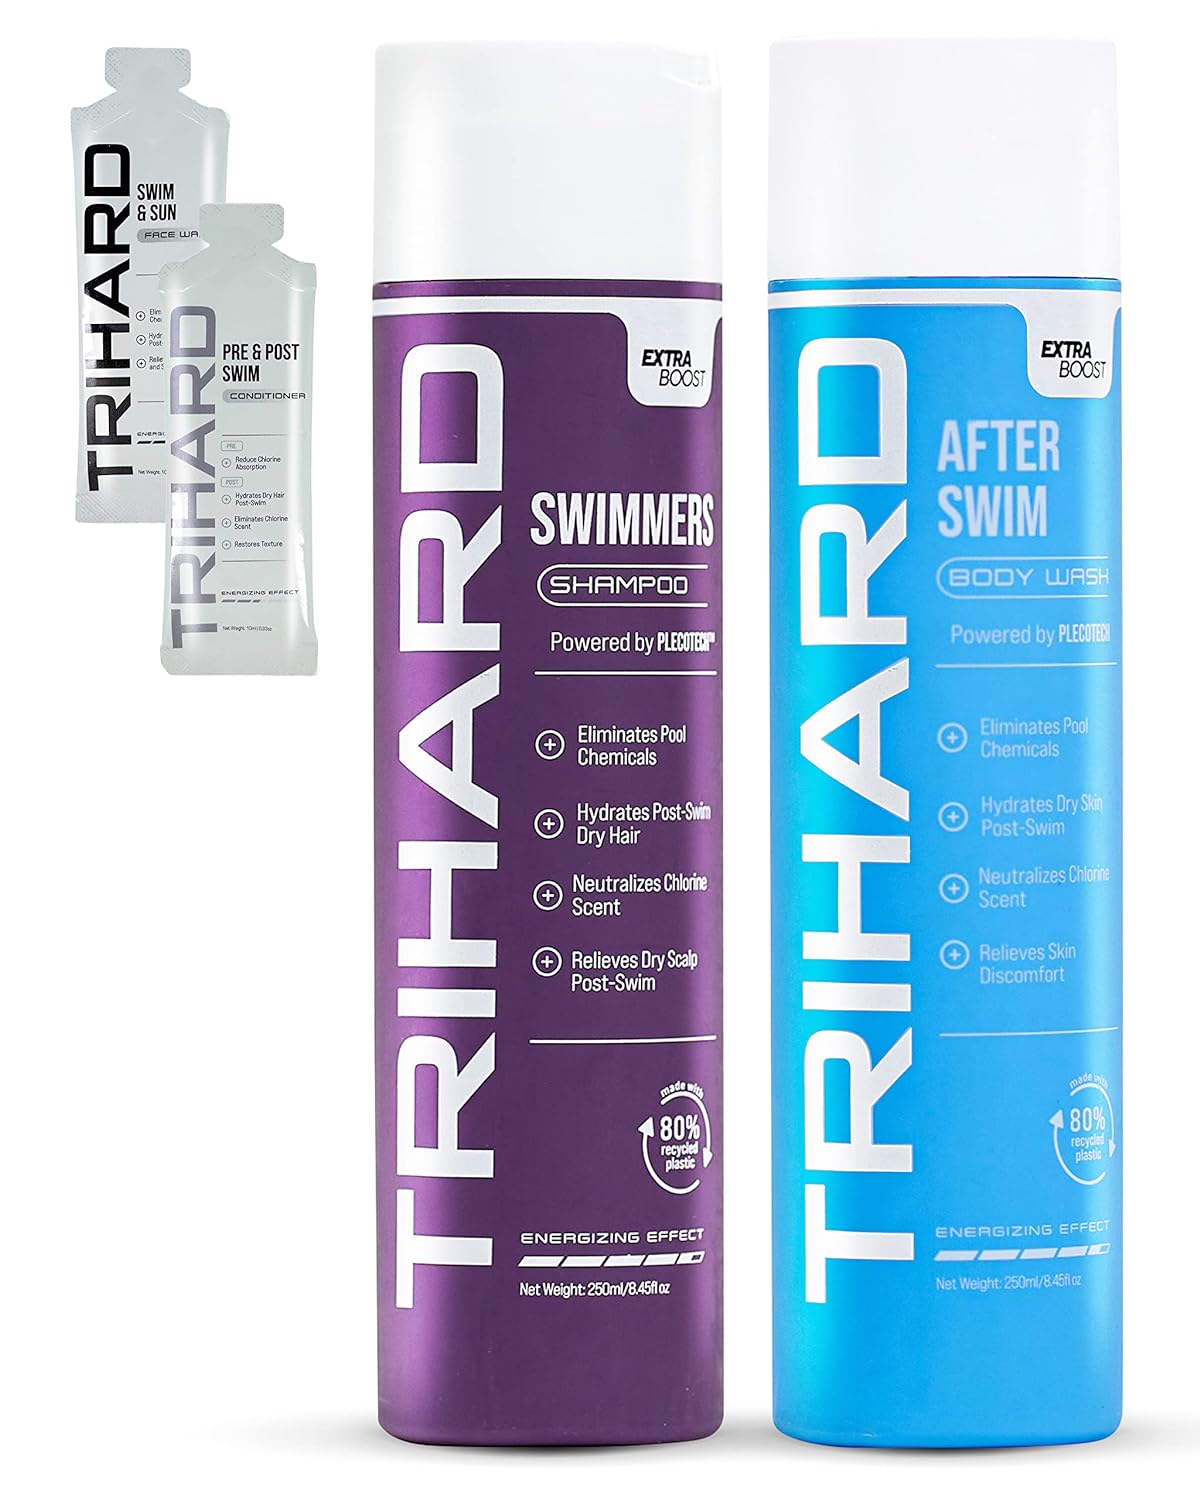 TRIHARD Swimmers Shampoo Extra Boost + After-Swim Body Wash Extra Boost | Specialized Swim Shampoo | Chlorine Removal Body Wash